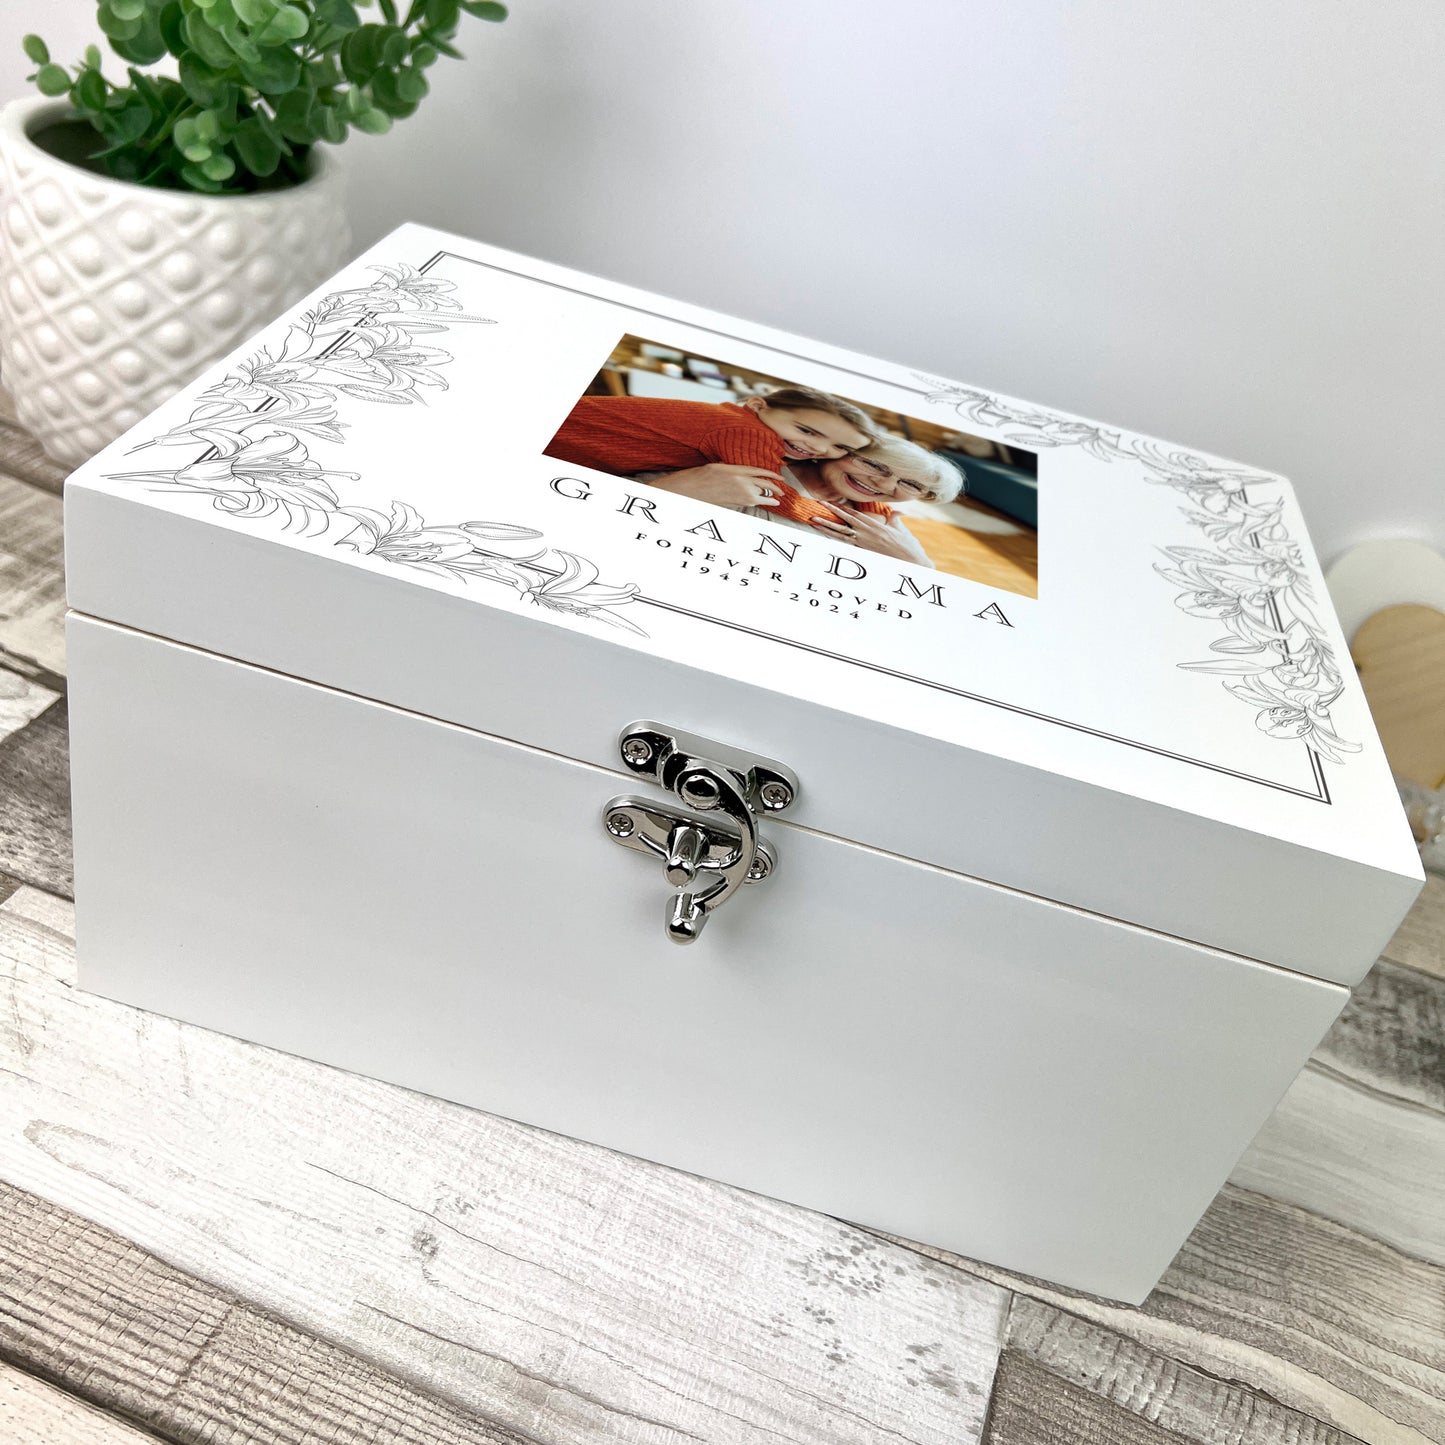 Personalised Lily Photo White Luxury Memory Box - 3 Sizes (22cm | 27cm | 30cm)